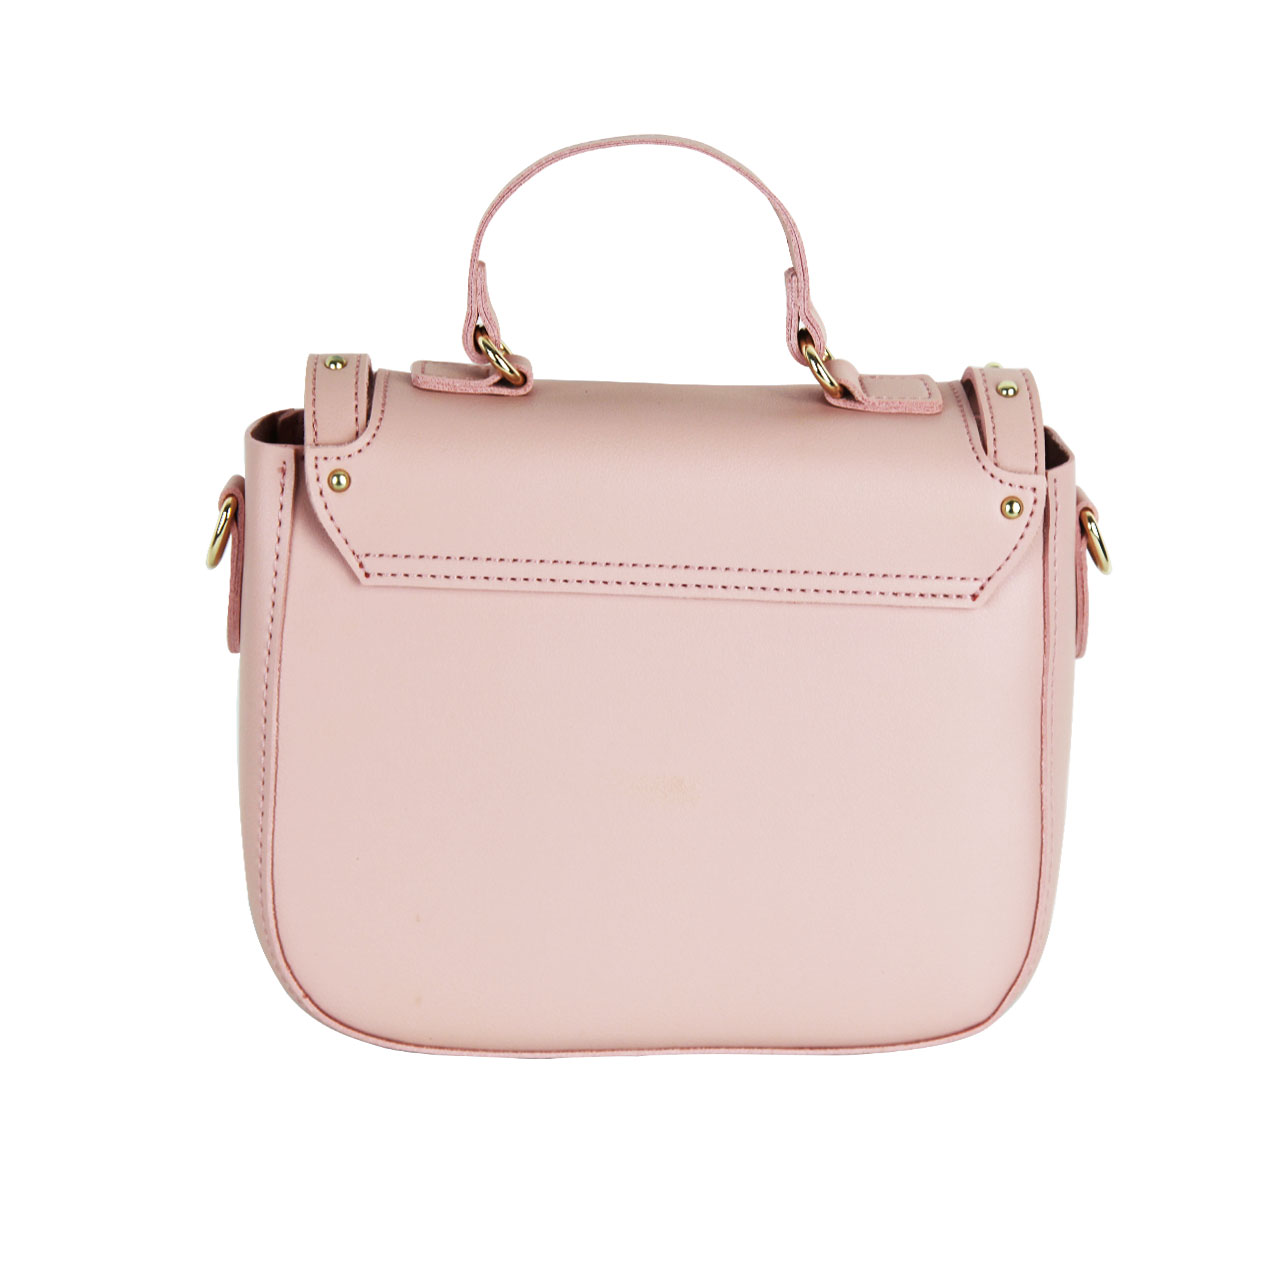 Oxford Red/Pink/White/Golden Metropolitan Leather Bag